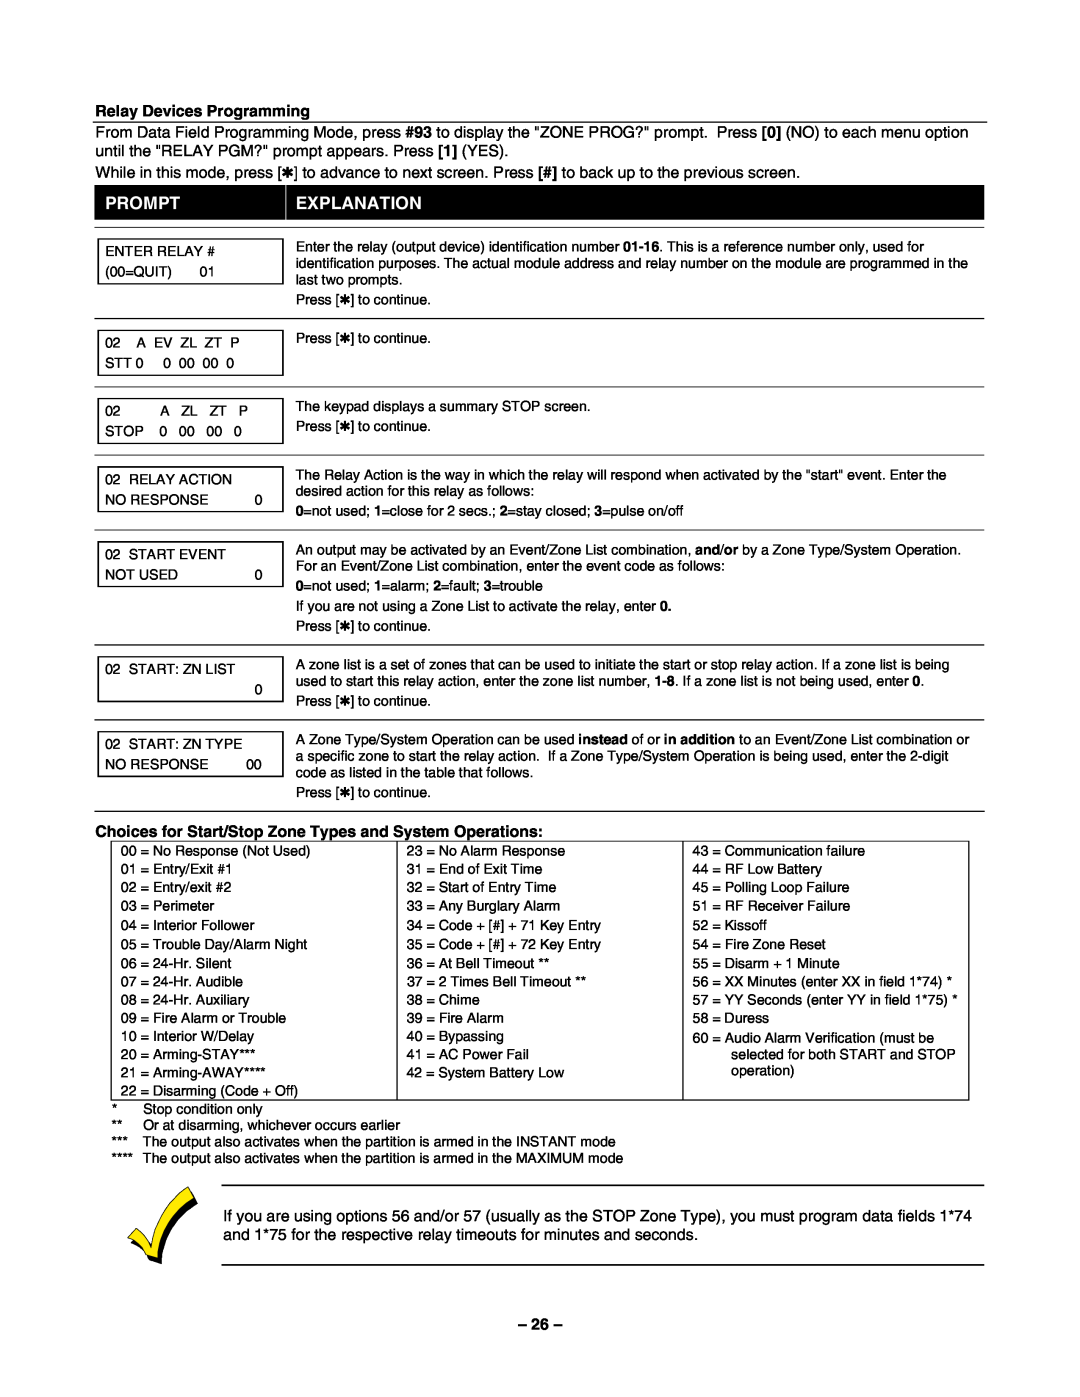 Honeywell Vista-50P/Vista-50PUL manual Promptexplanation, Relay Devices Programming 